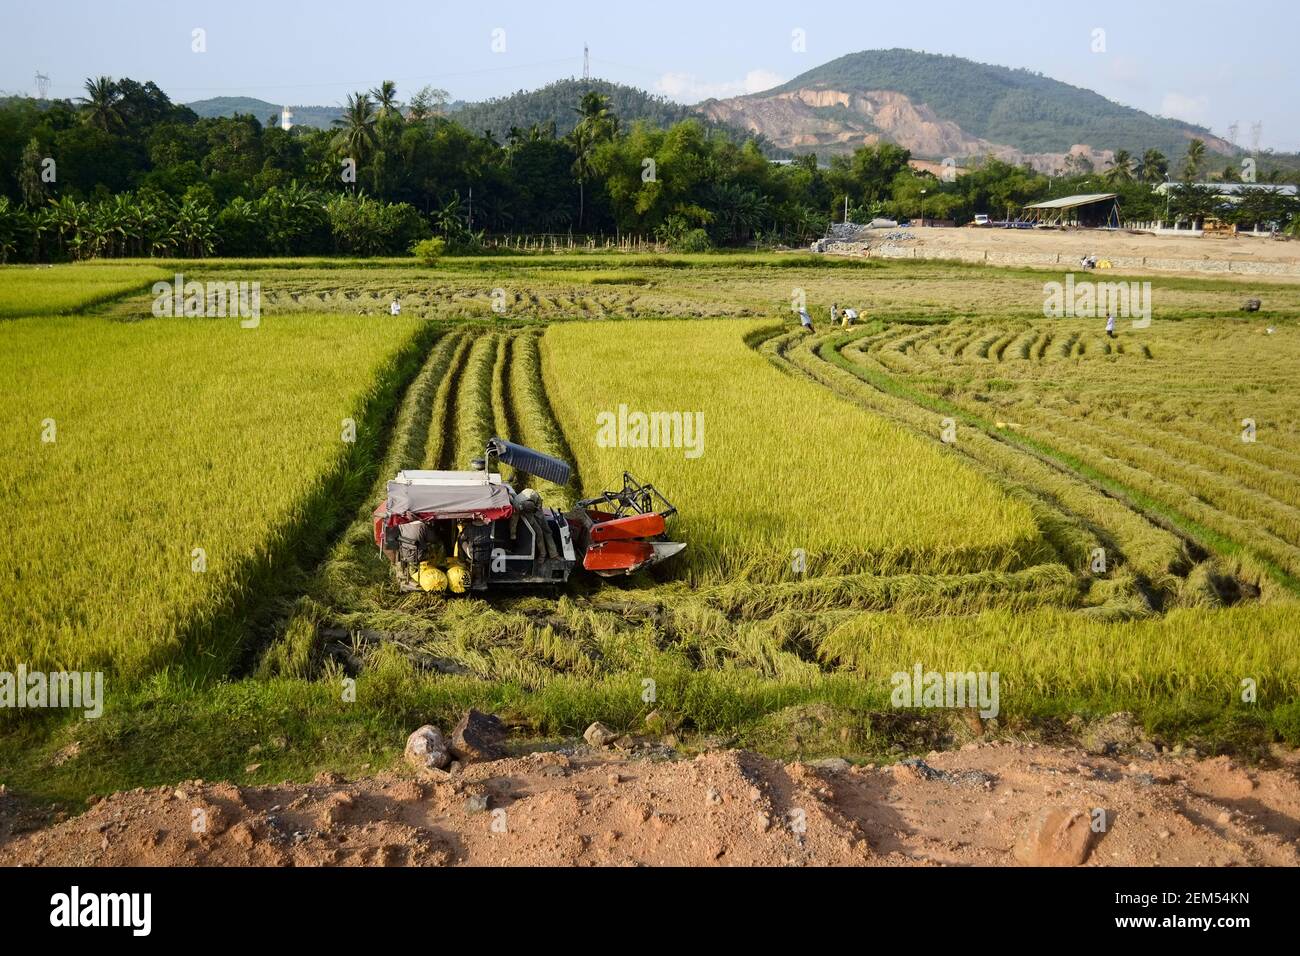 Combine harvester machine harvests ripe rice on a field field, Vietnam Stock Photo